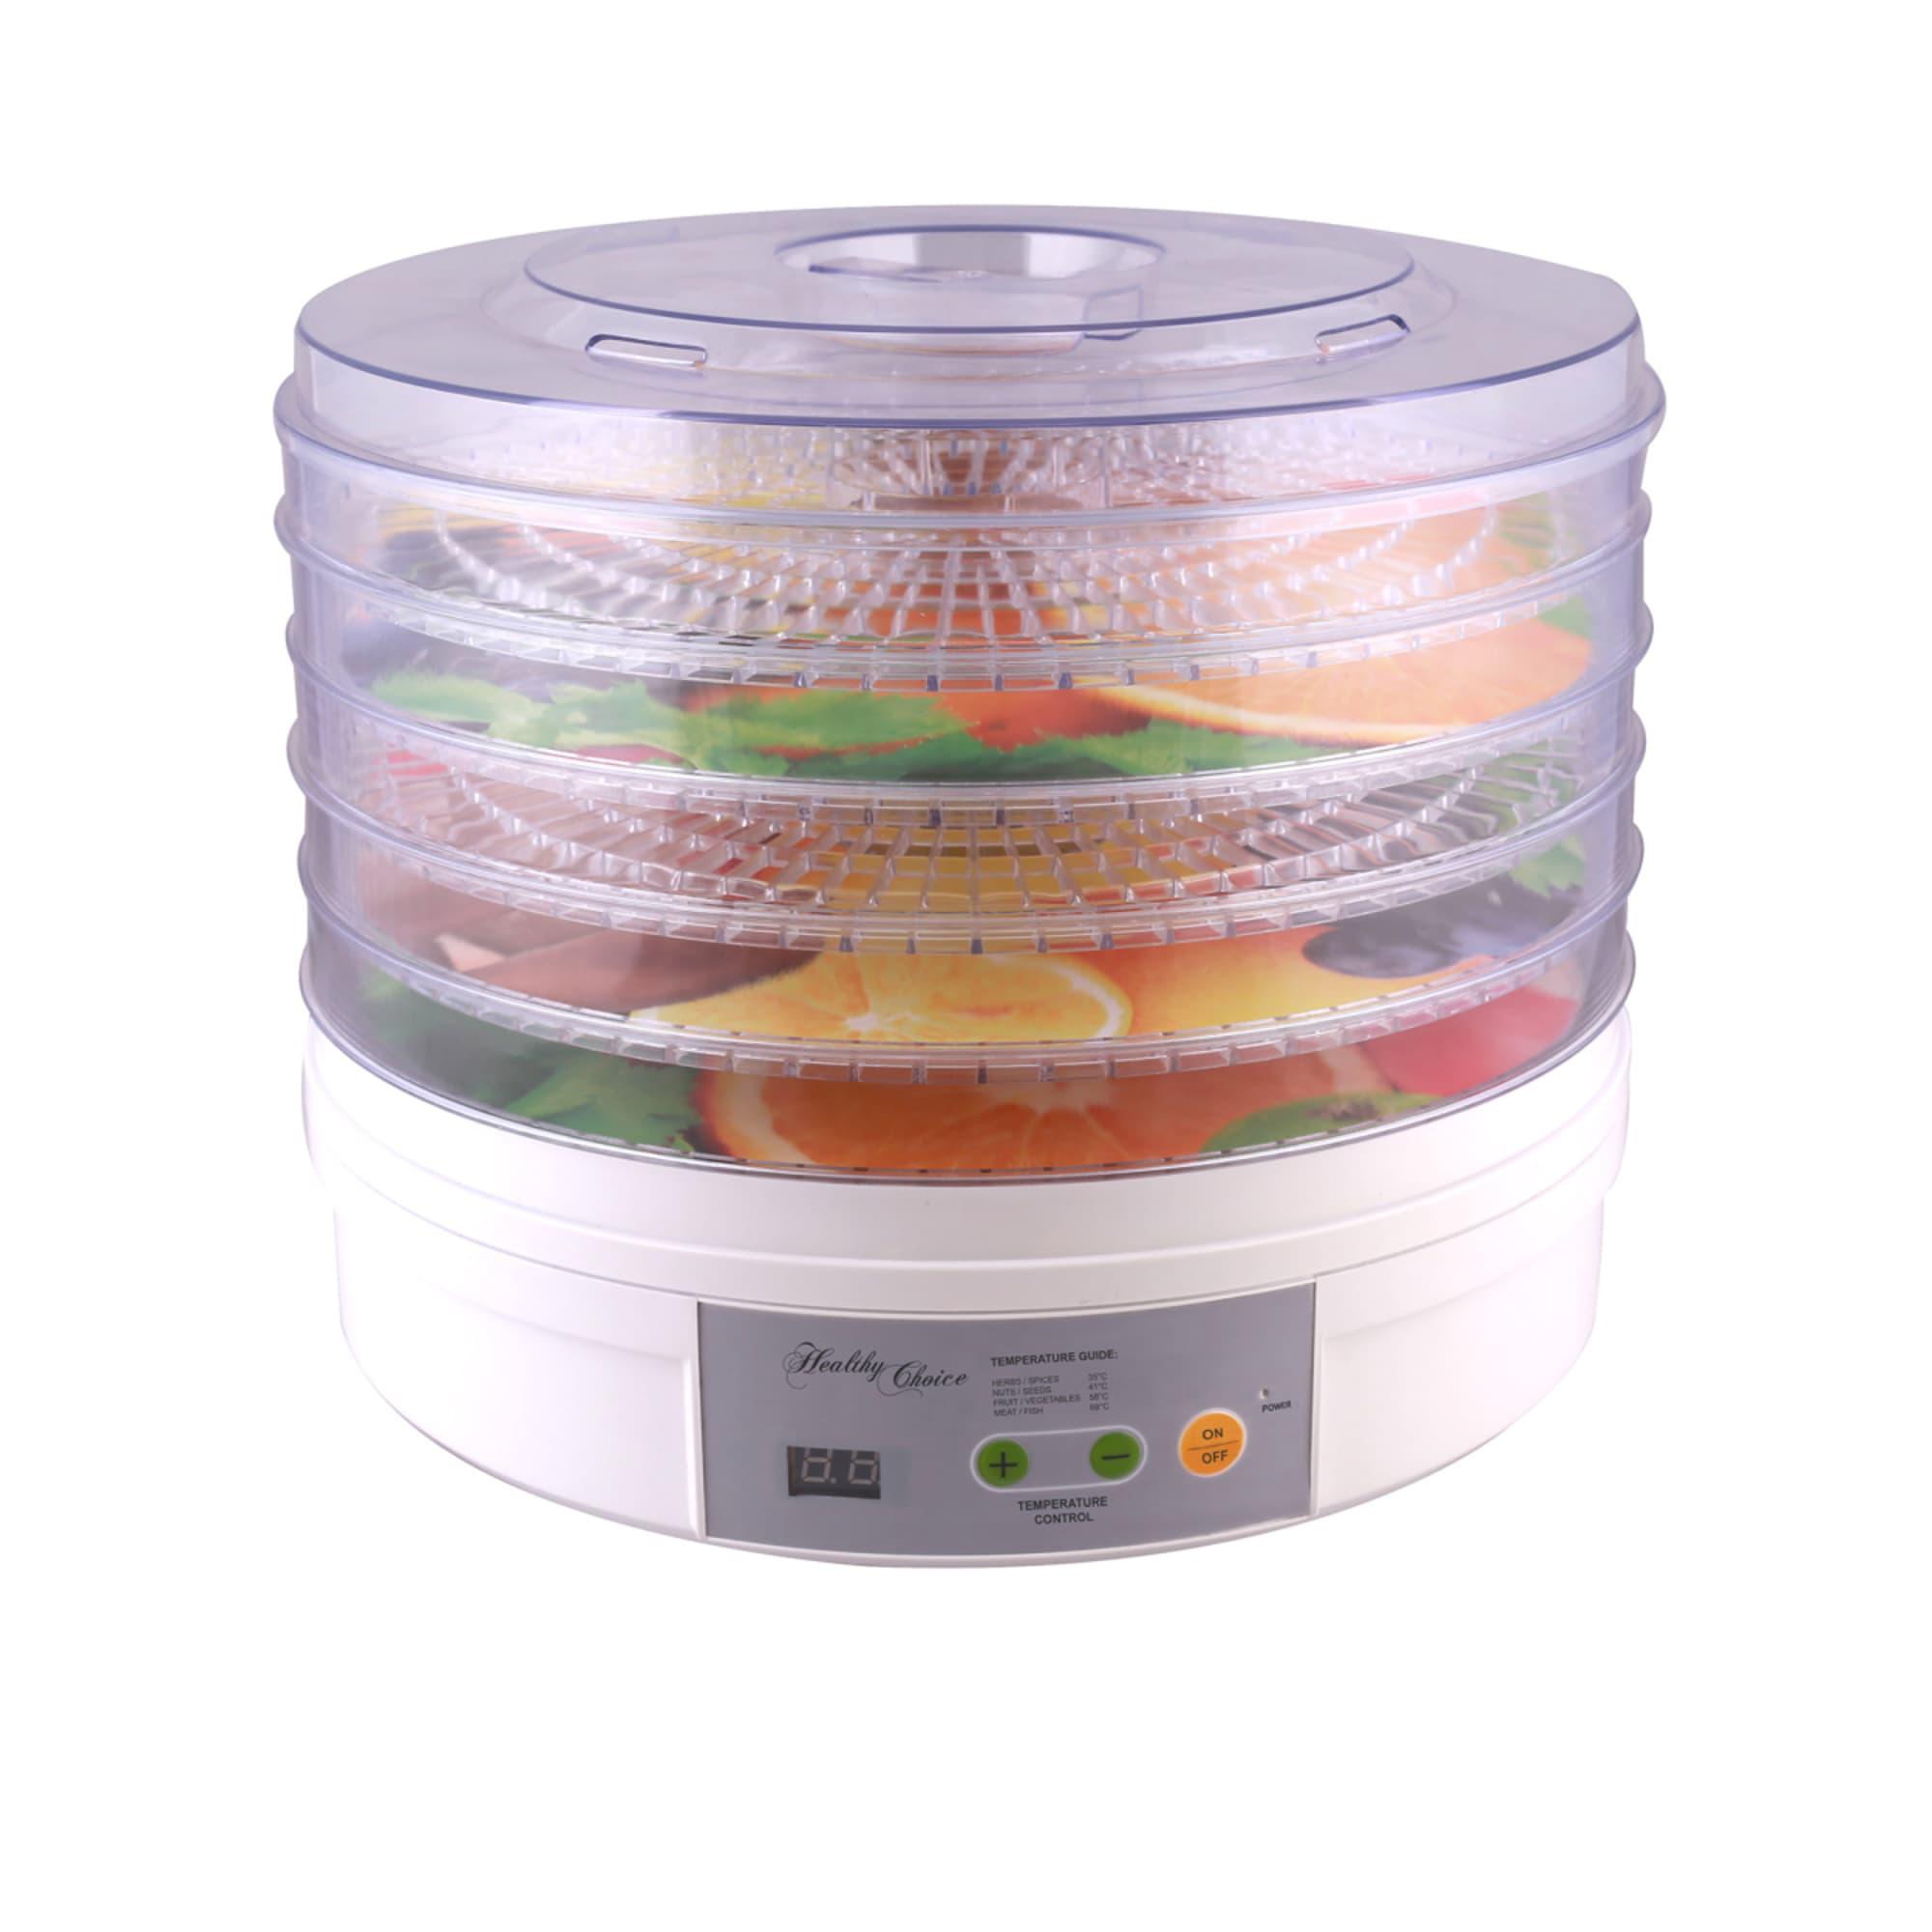 Healthy Choice 5 Tray Food Dehydrator with Digital Display 7